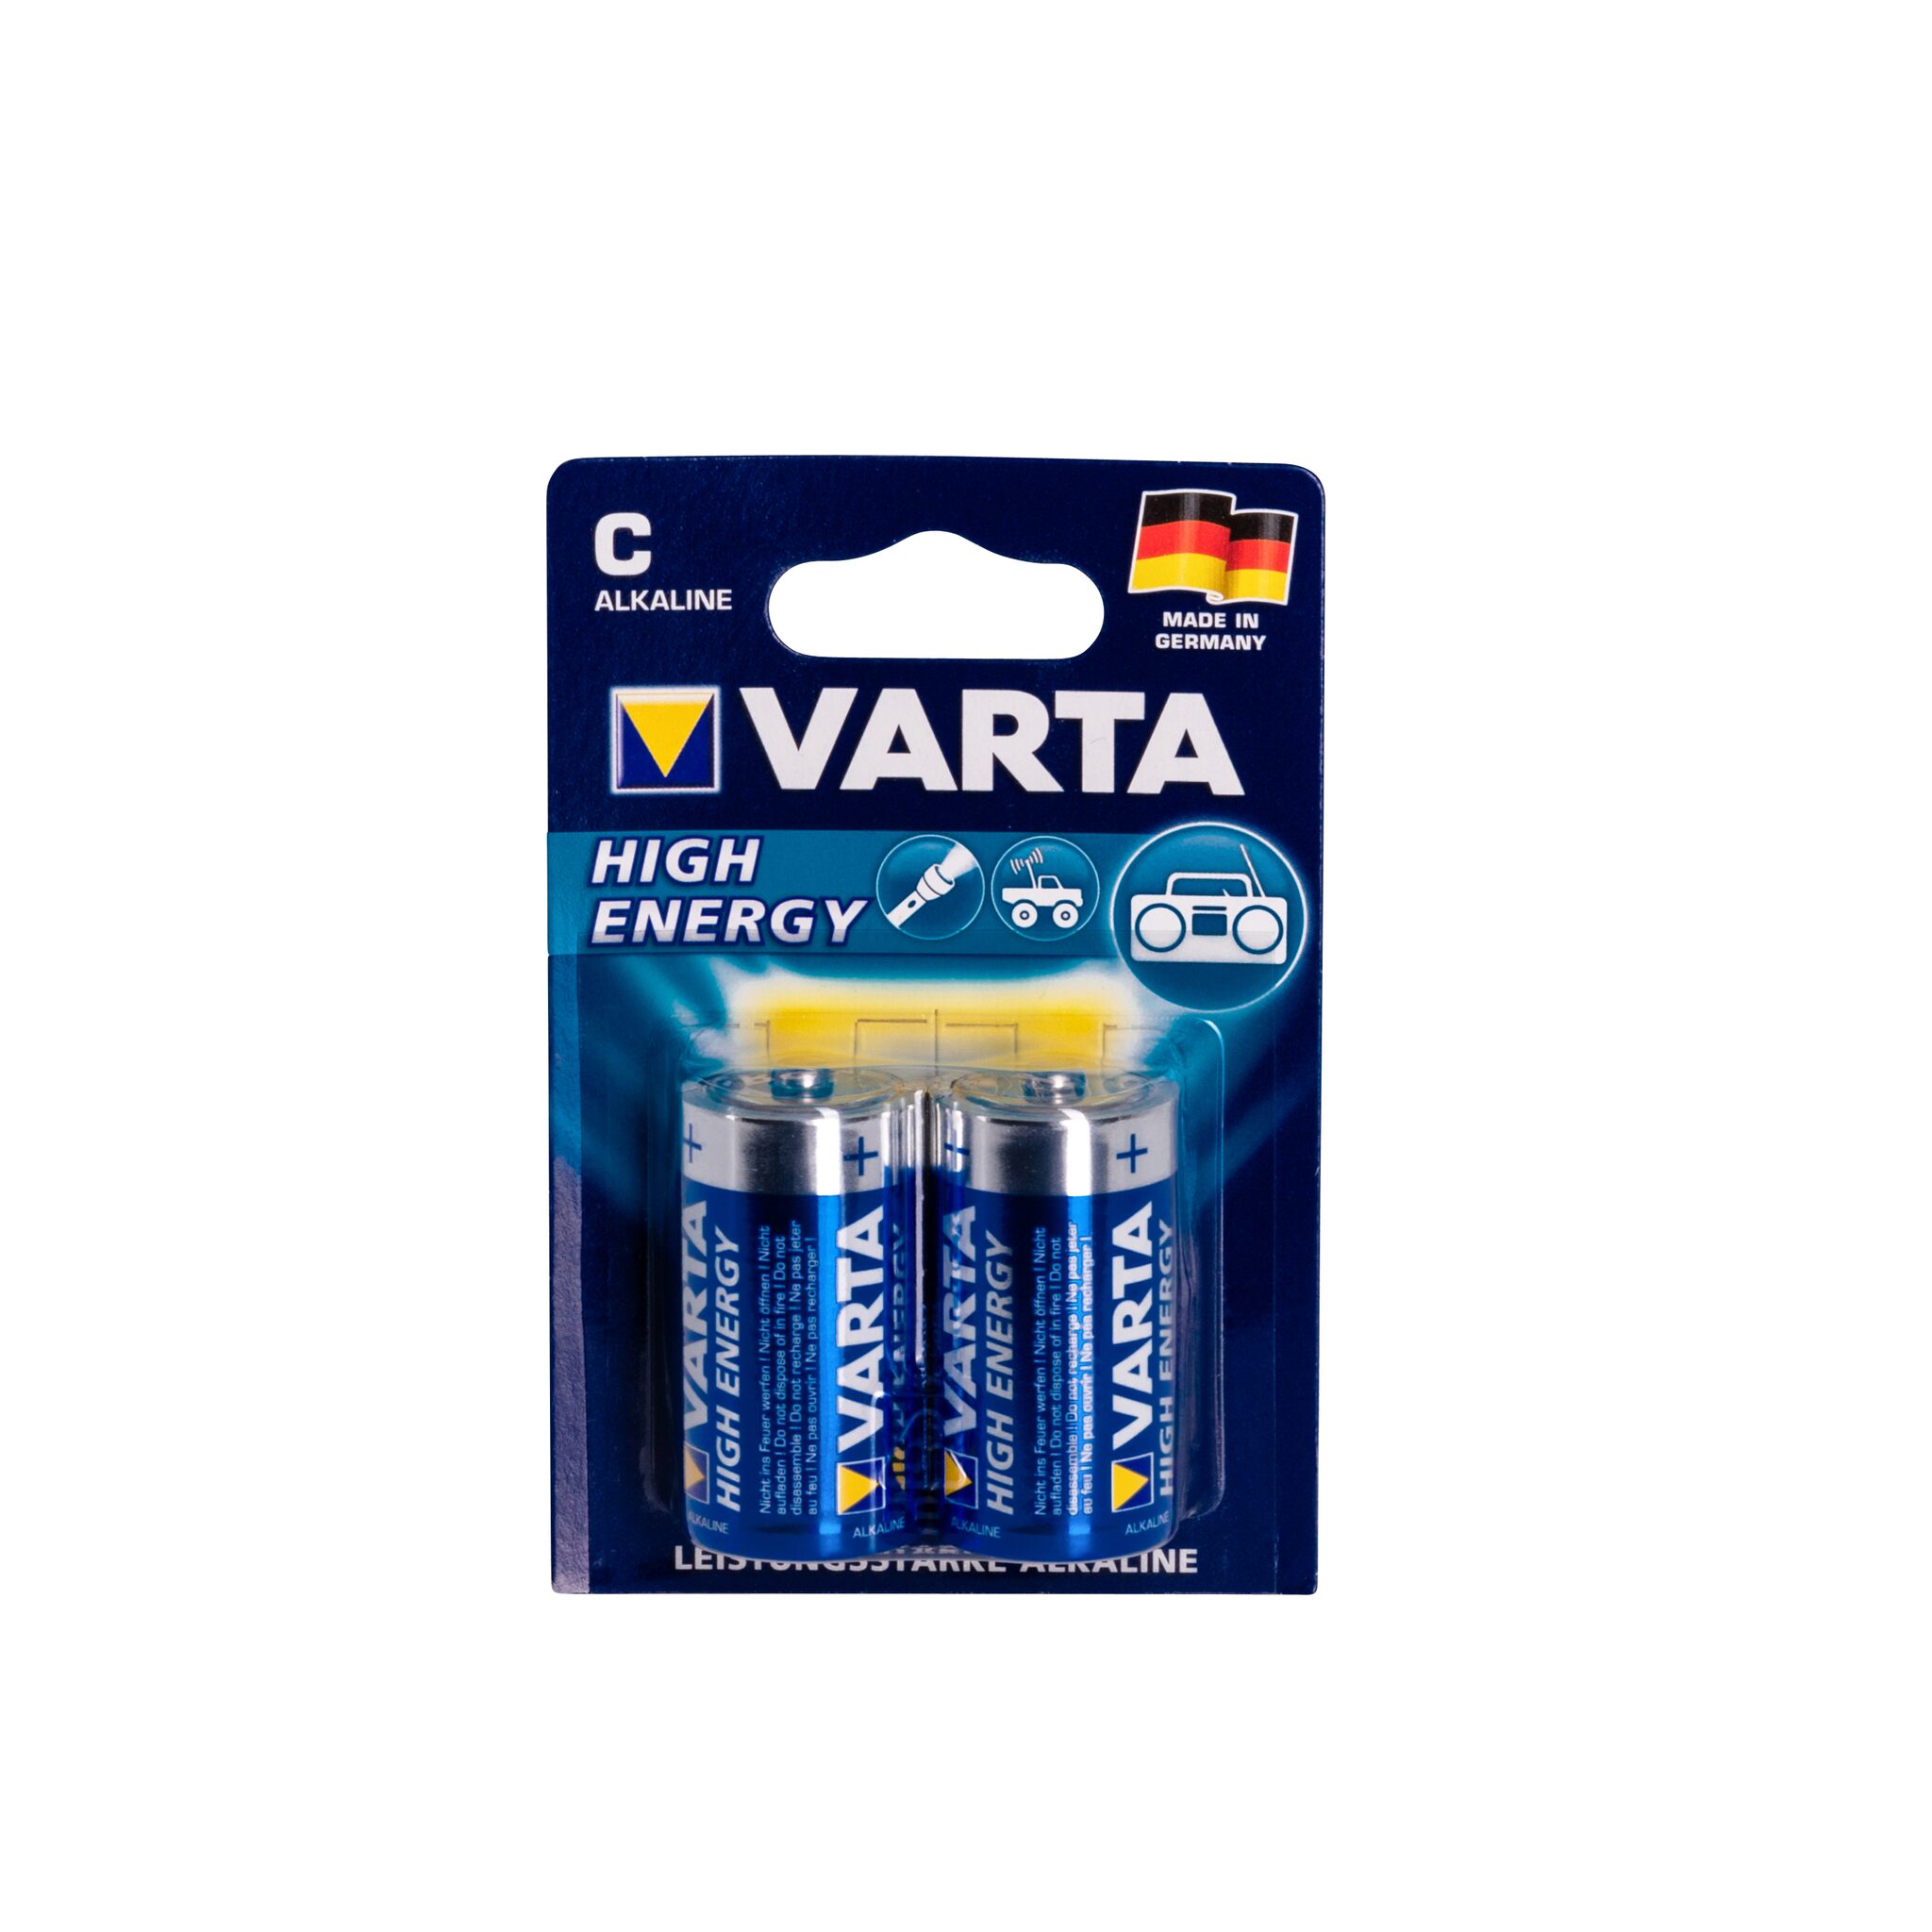 VARTA High Energy Alkaline Batterie Typ C, Baby